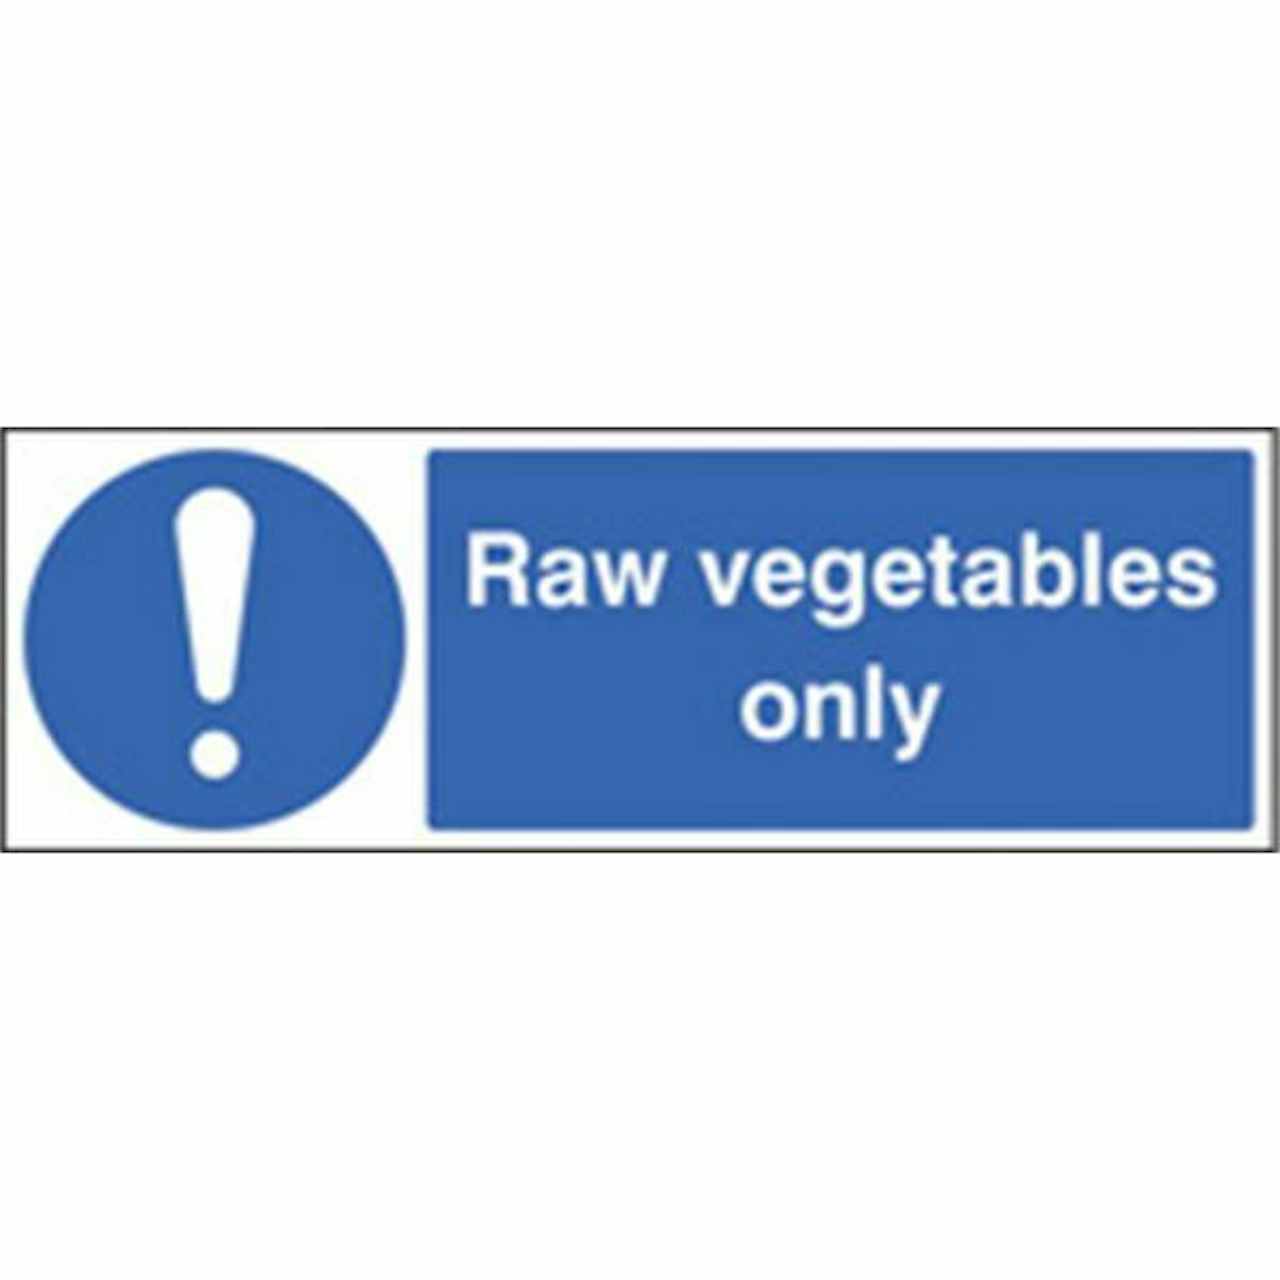 Raw Vegetables Mandatory Sign